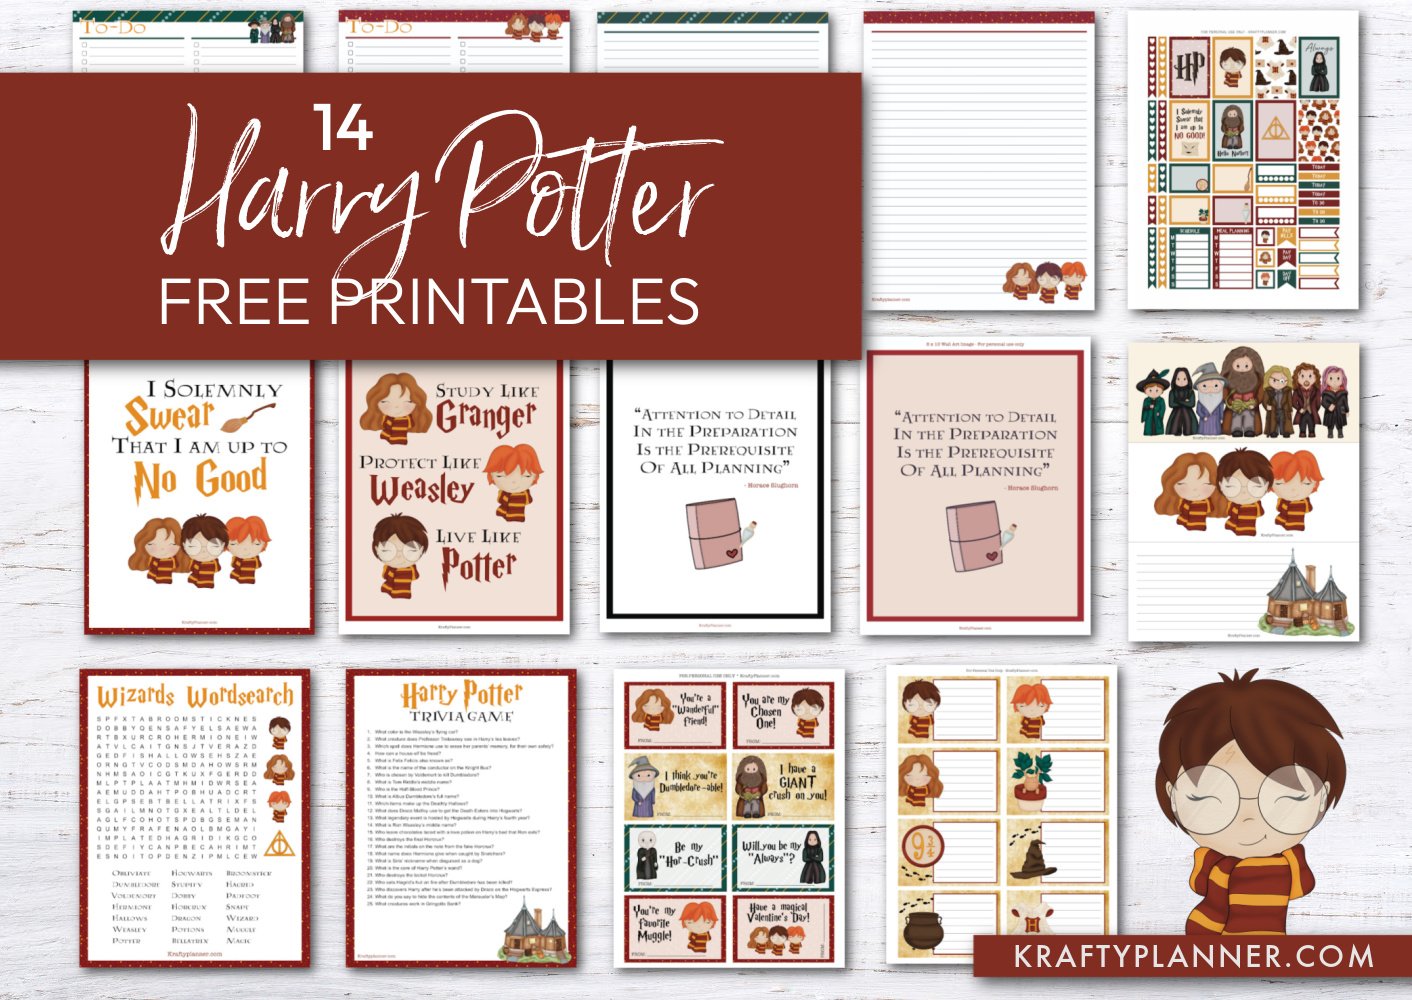 14 Harry Potter Free Printables